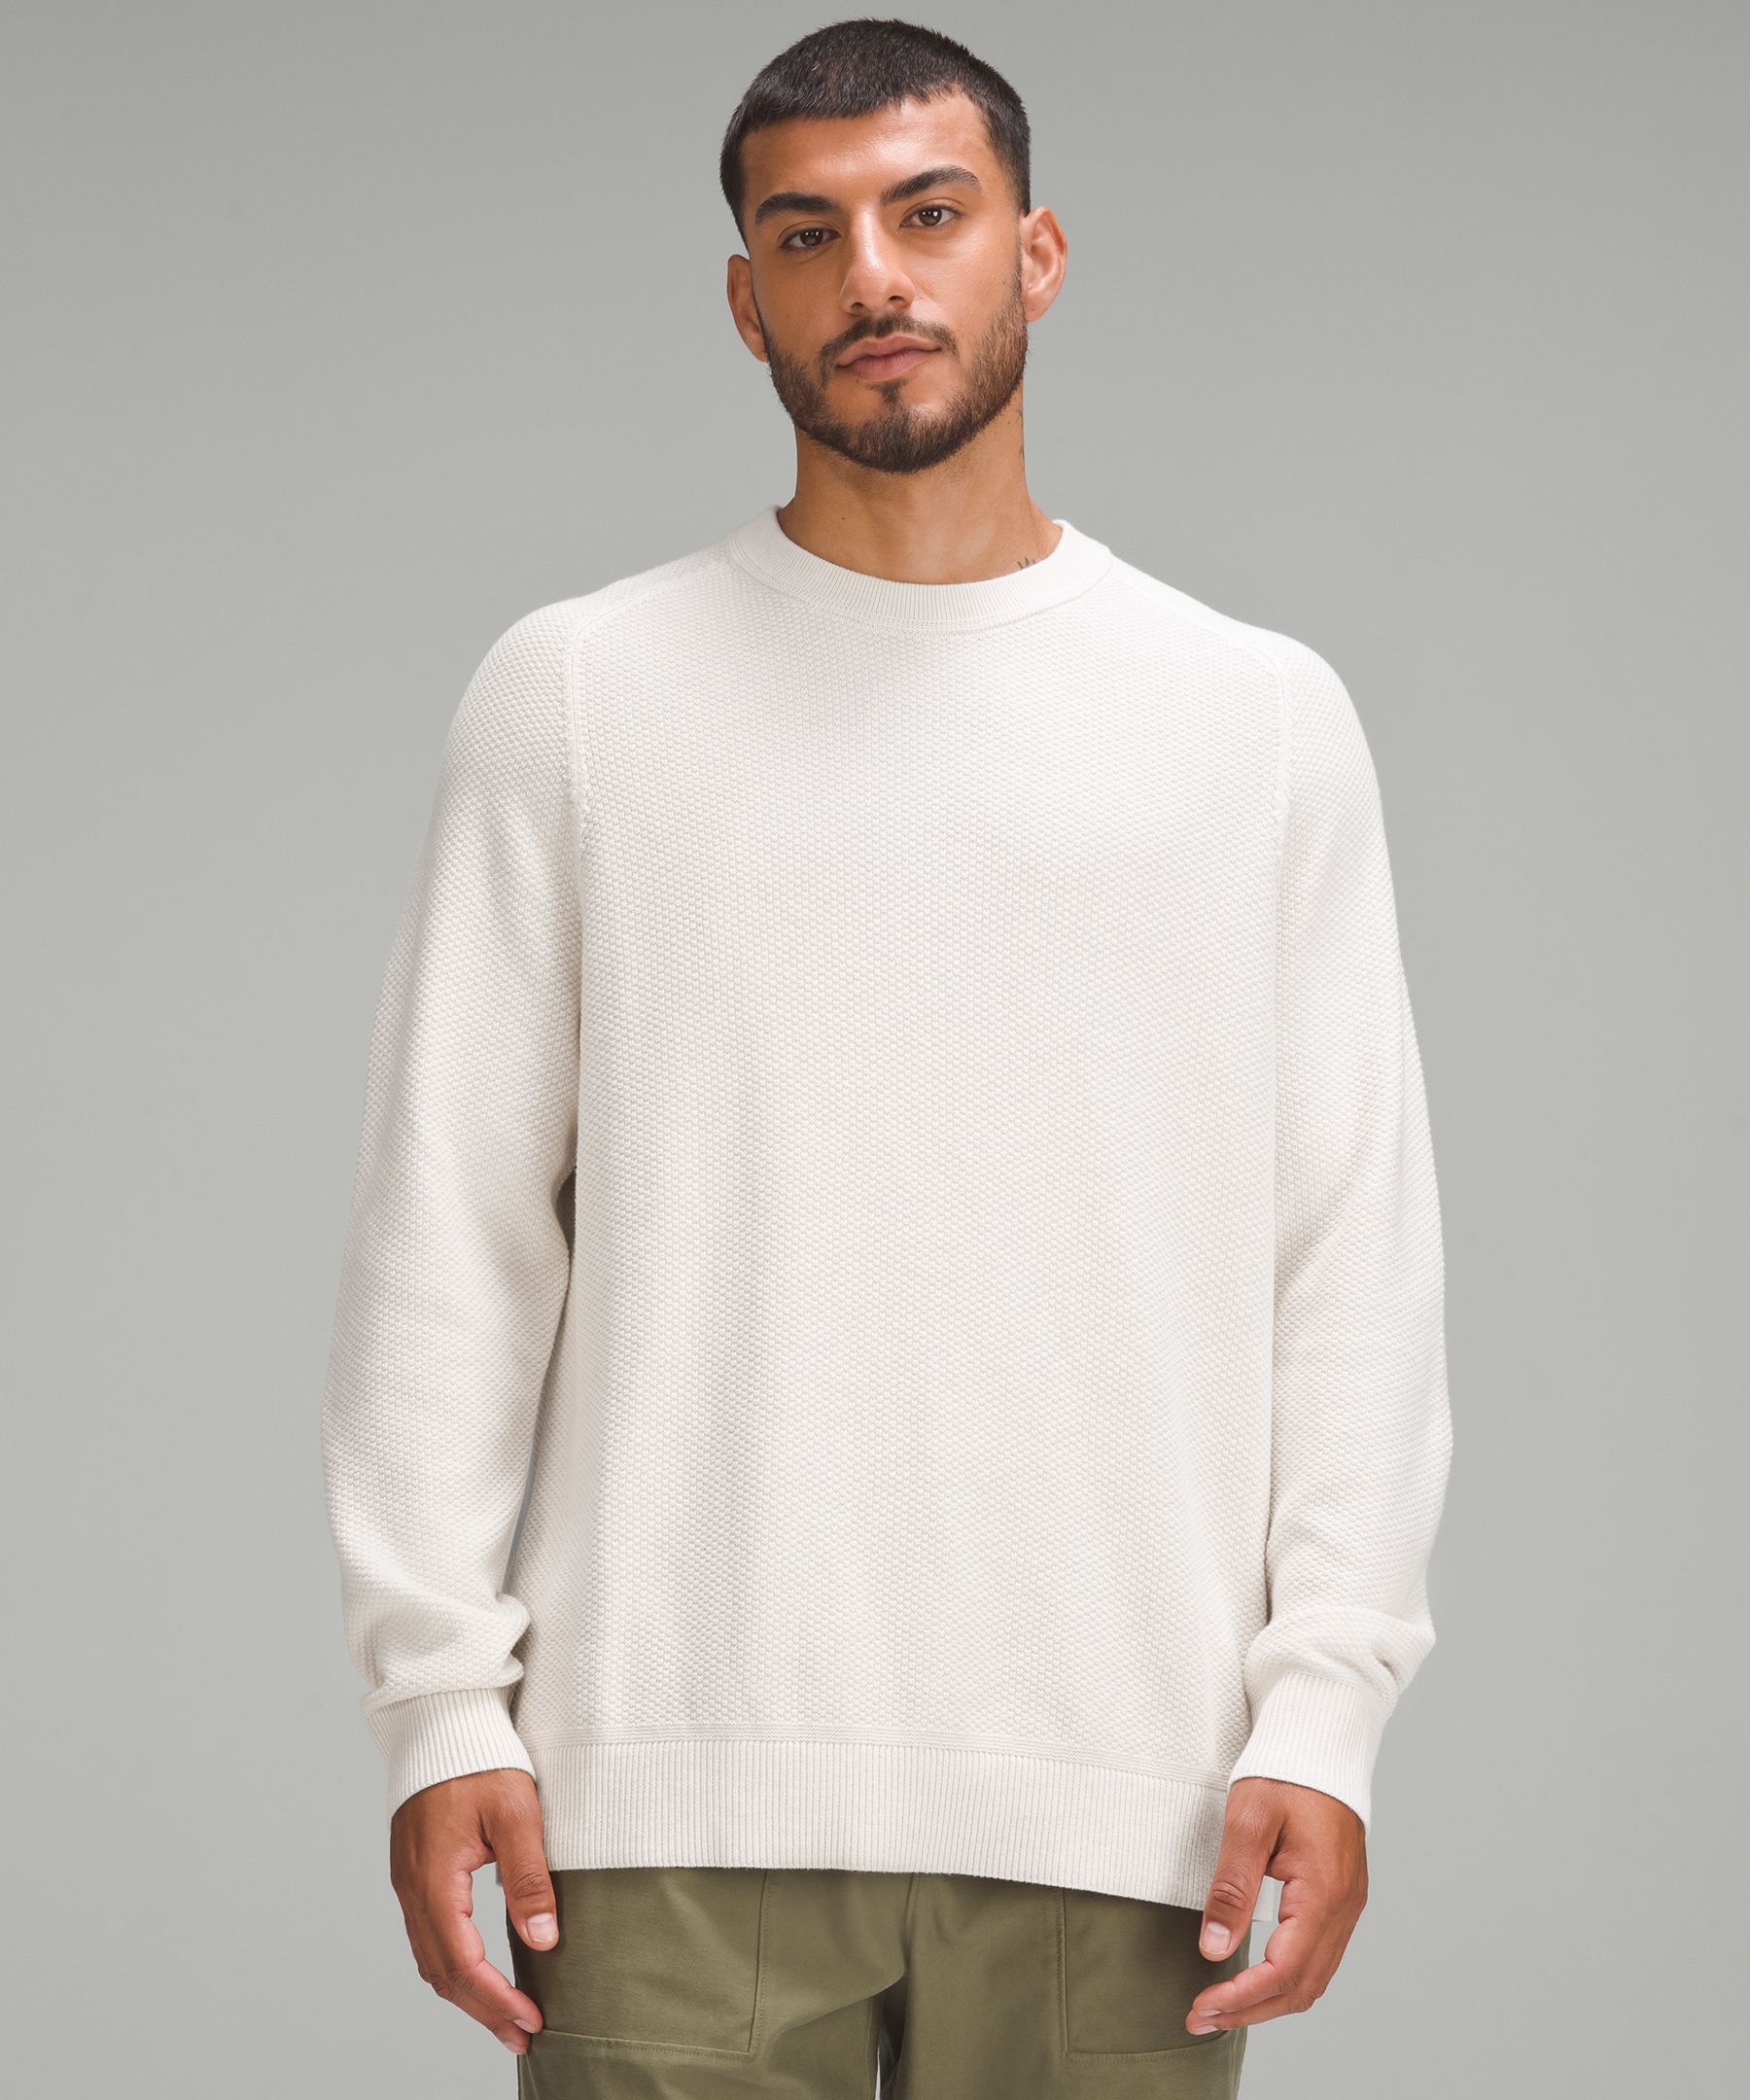 Men's White Crewneck Sweaters